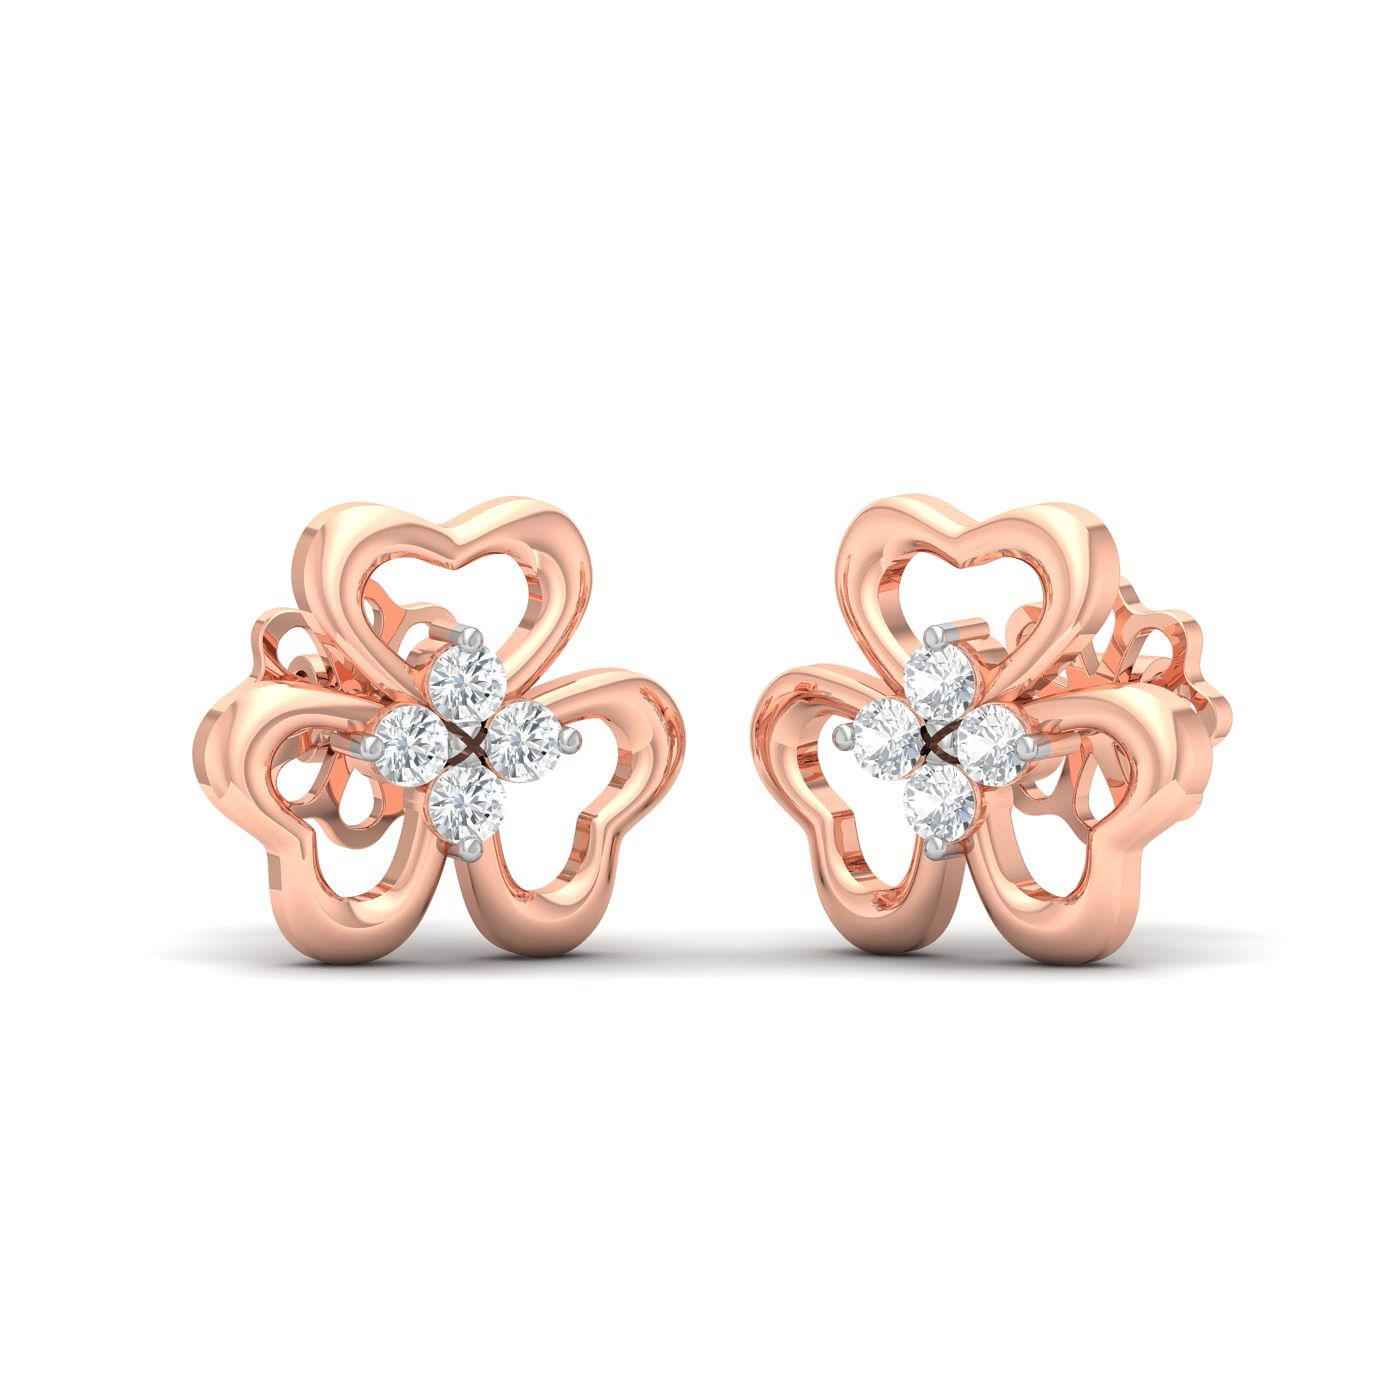 Flower Design Stud Diamond Ring